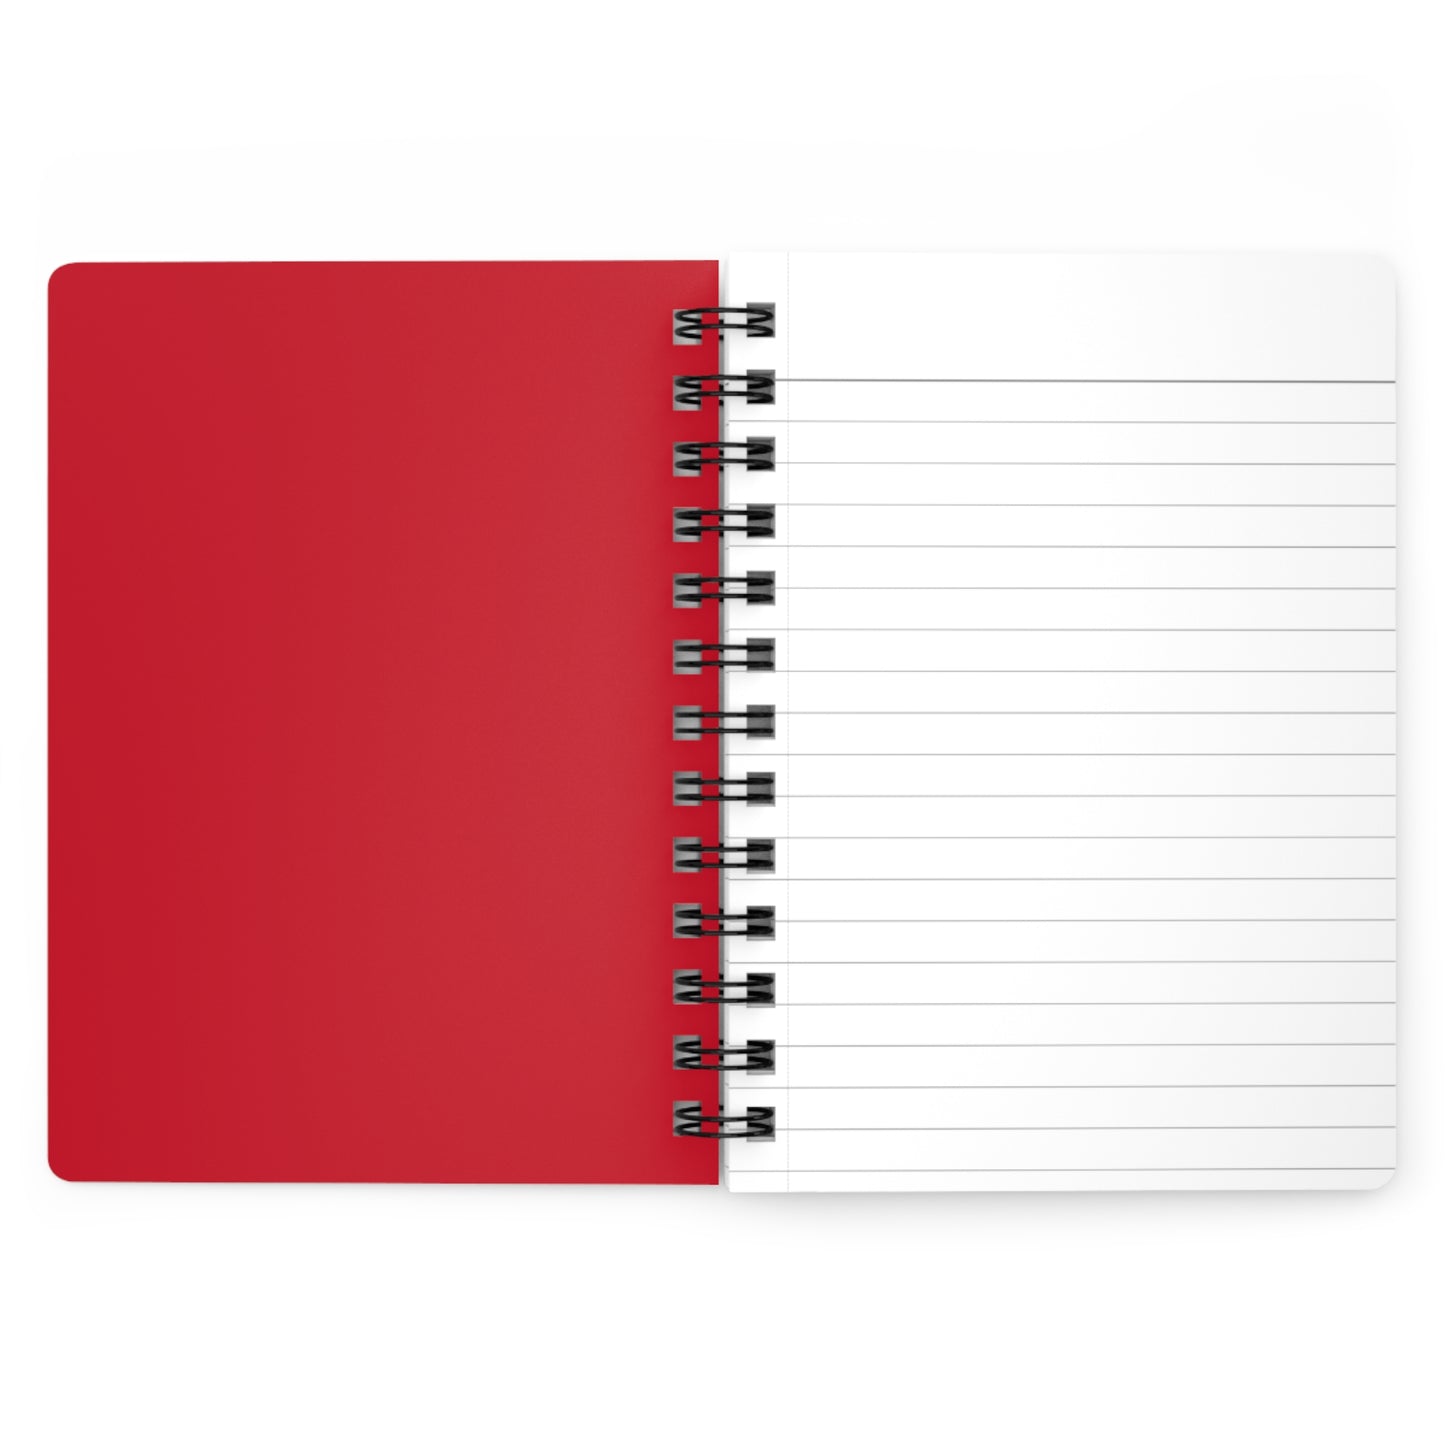 Snowman - Spiral Bound Journal -Red - Holiday Notepad